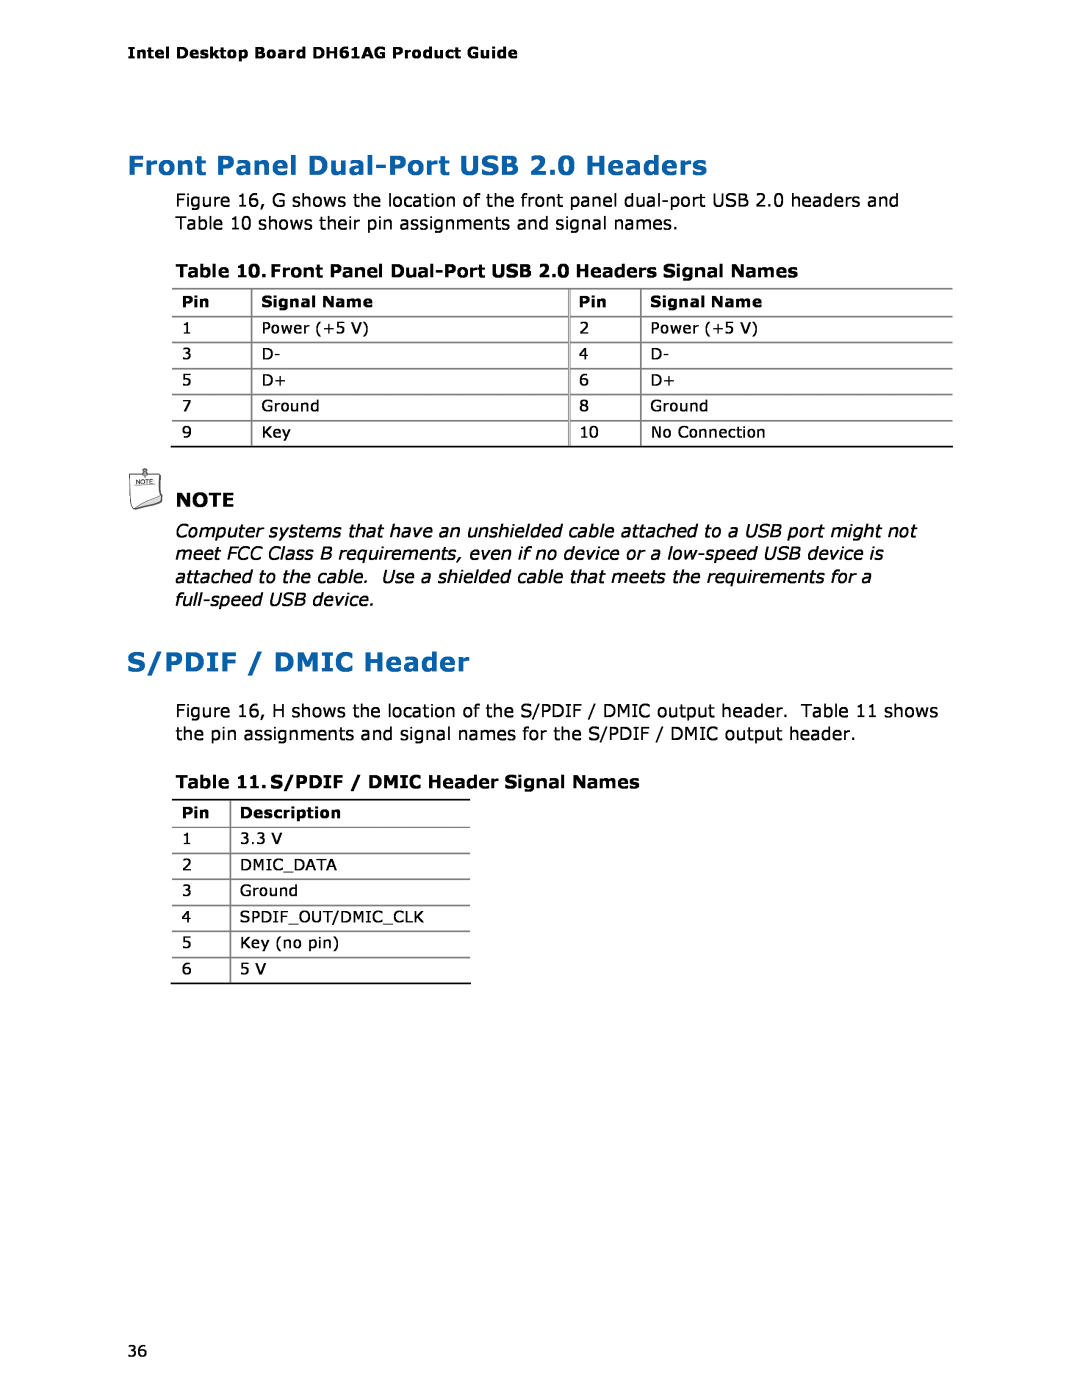 Intel BOXDH61AG manual Front Panel Dual-Port USB 2.0 Headers, S/PDIF / DMIC Header Signal Names 